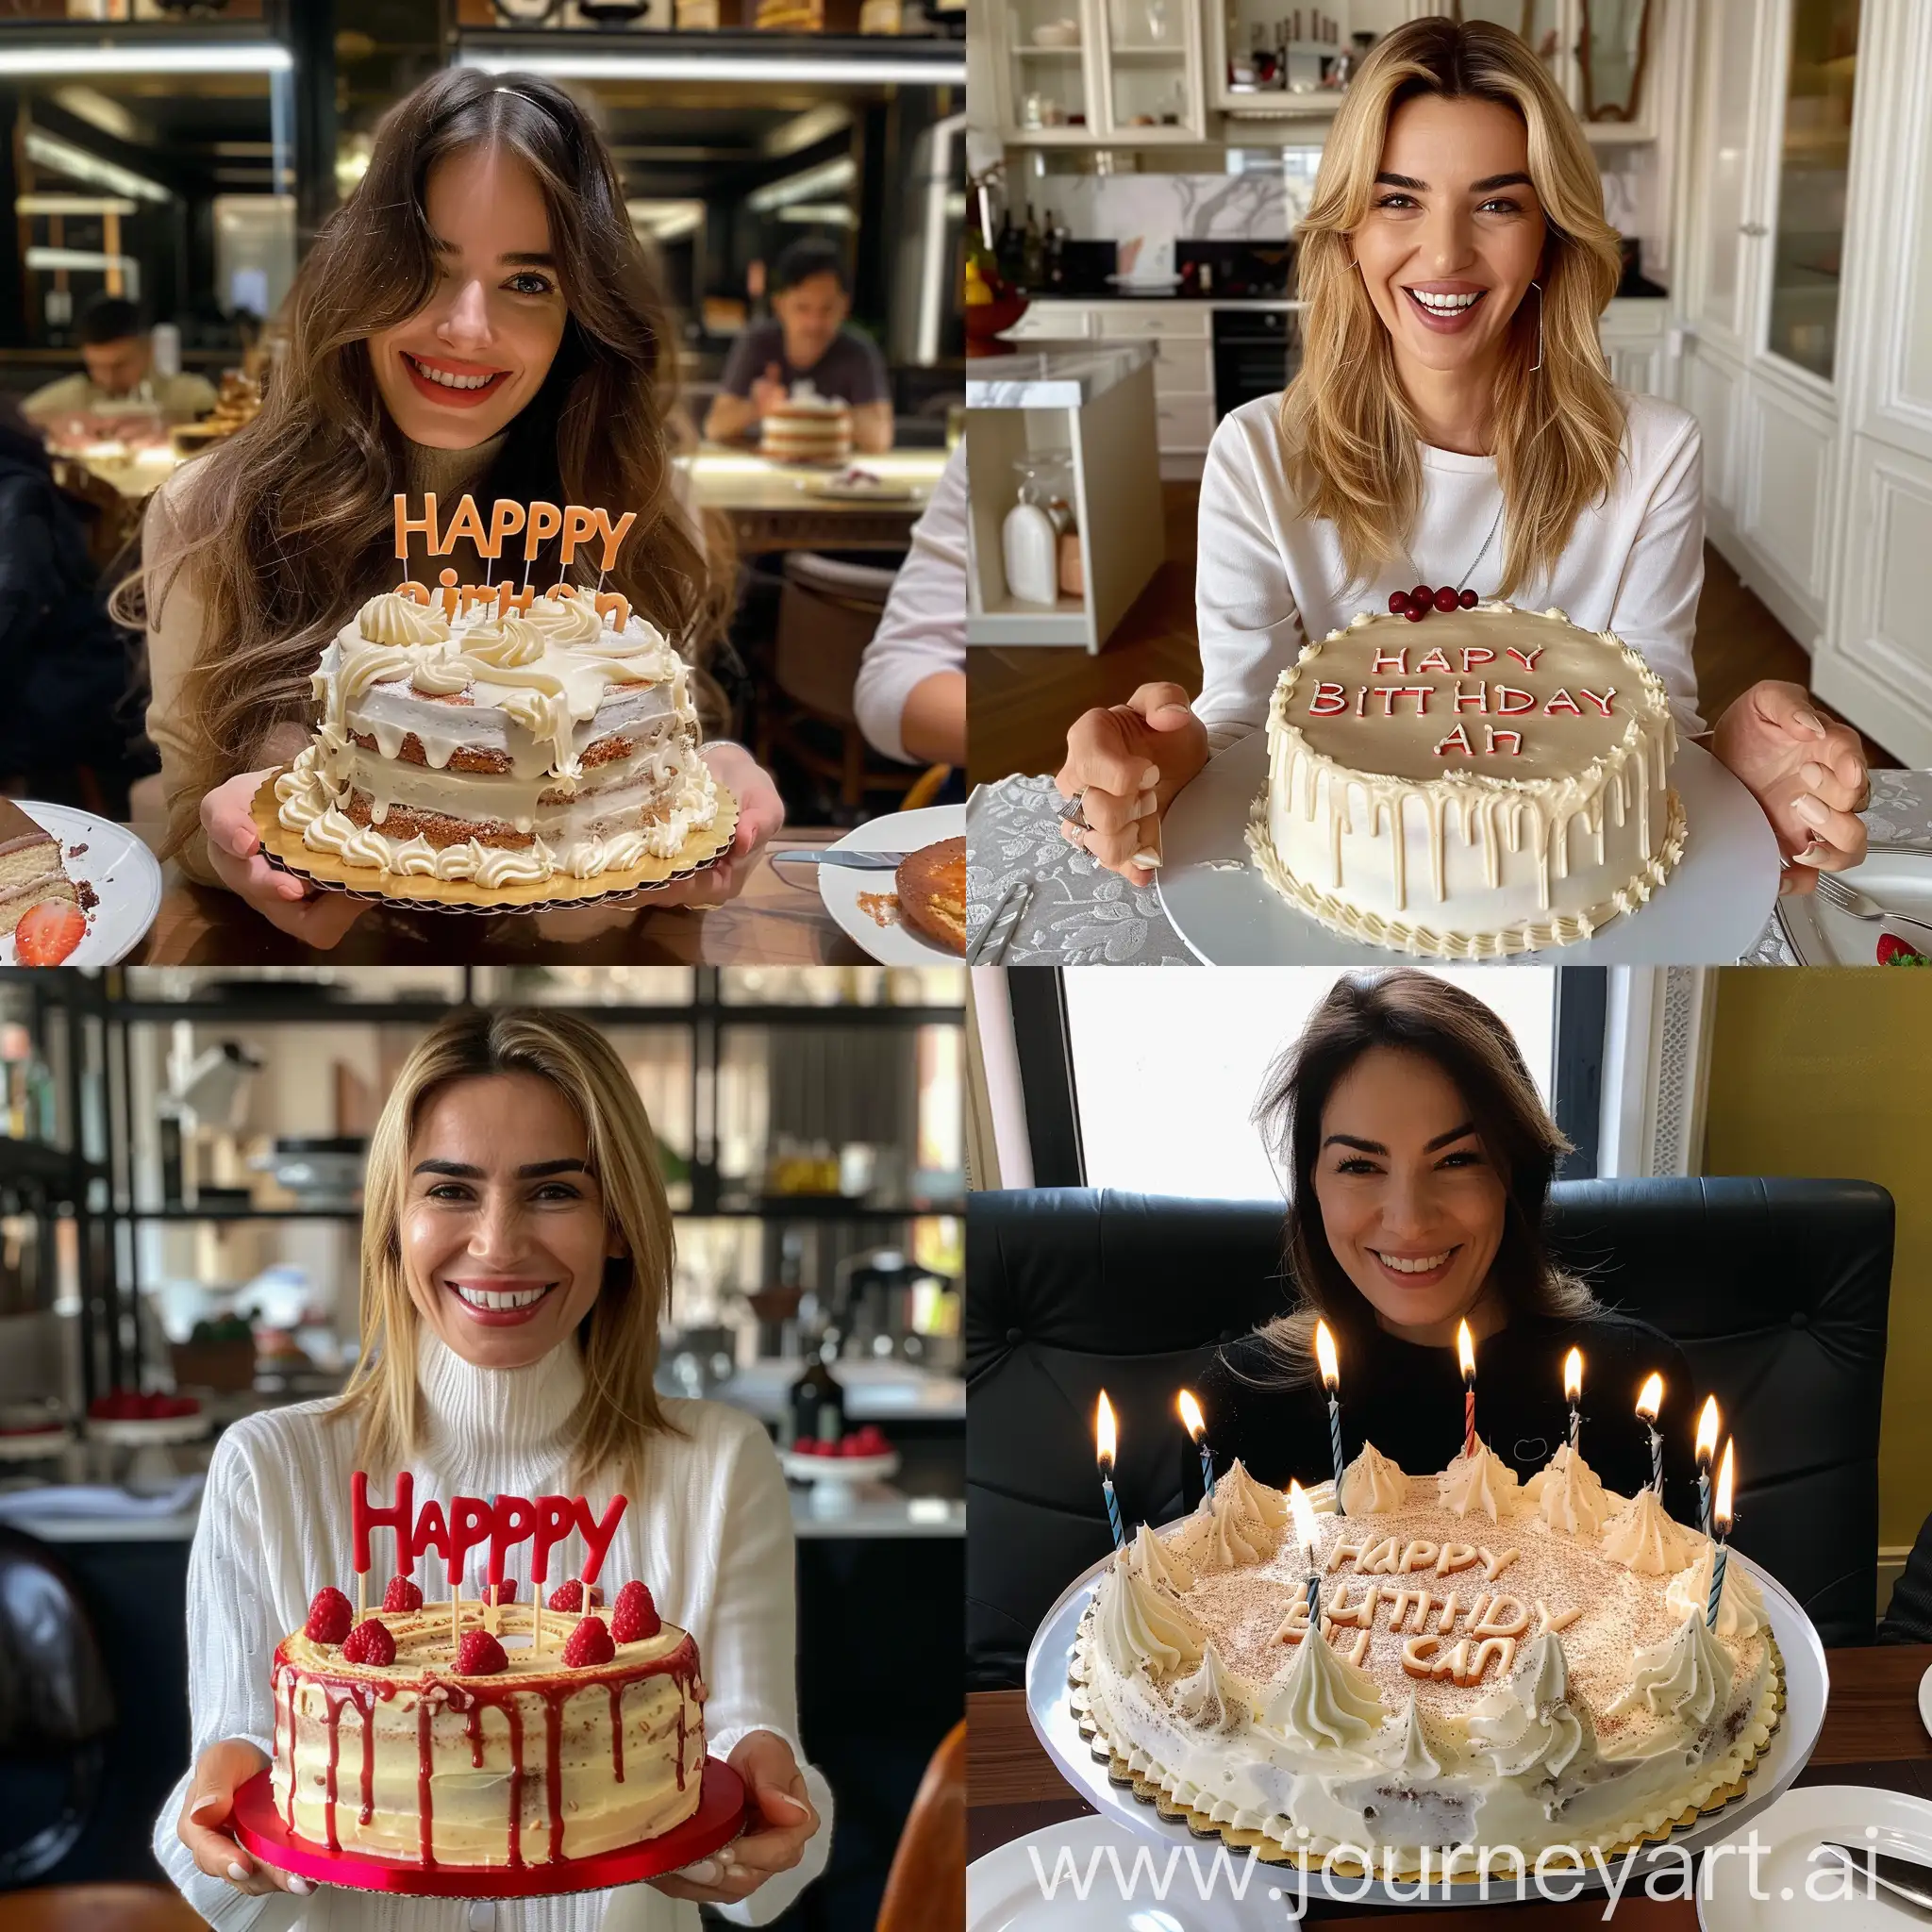 Turkish-Singer-Sibel-Can-Celebrates-Birthday-with-Joyful-Cake